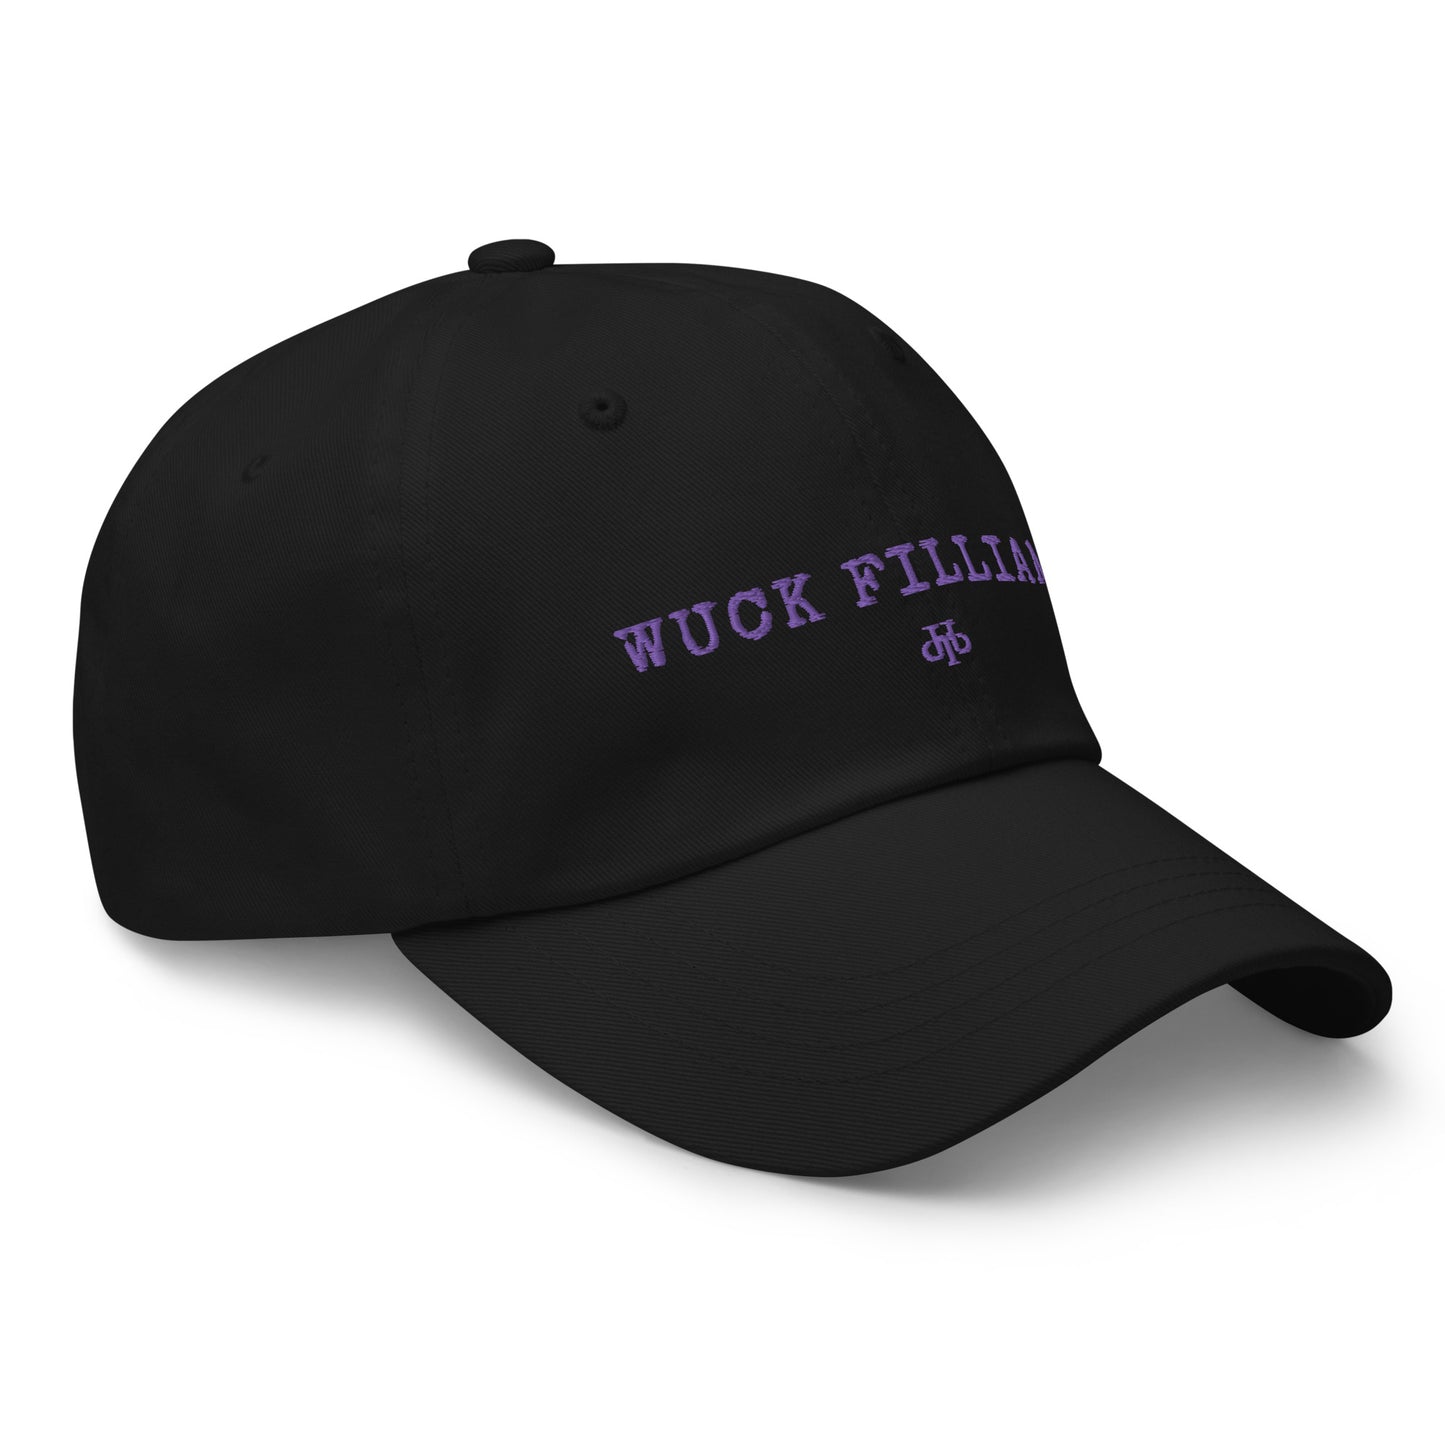 Wuck Filliams hat